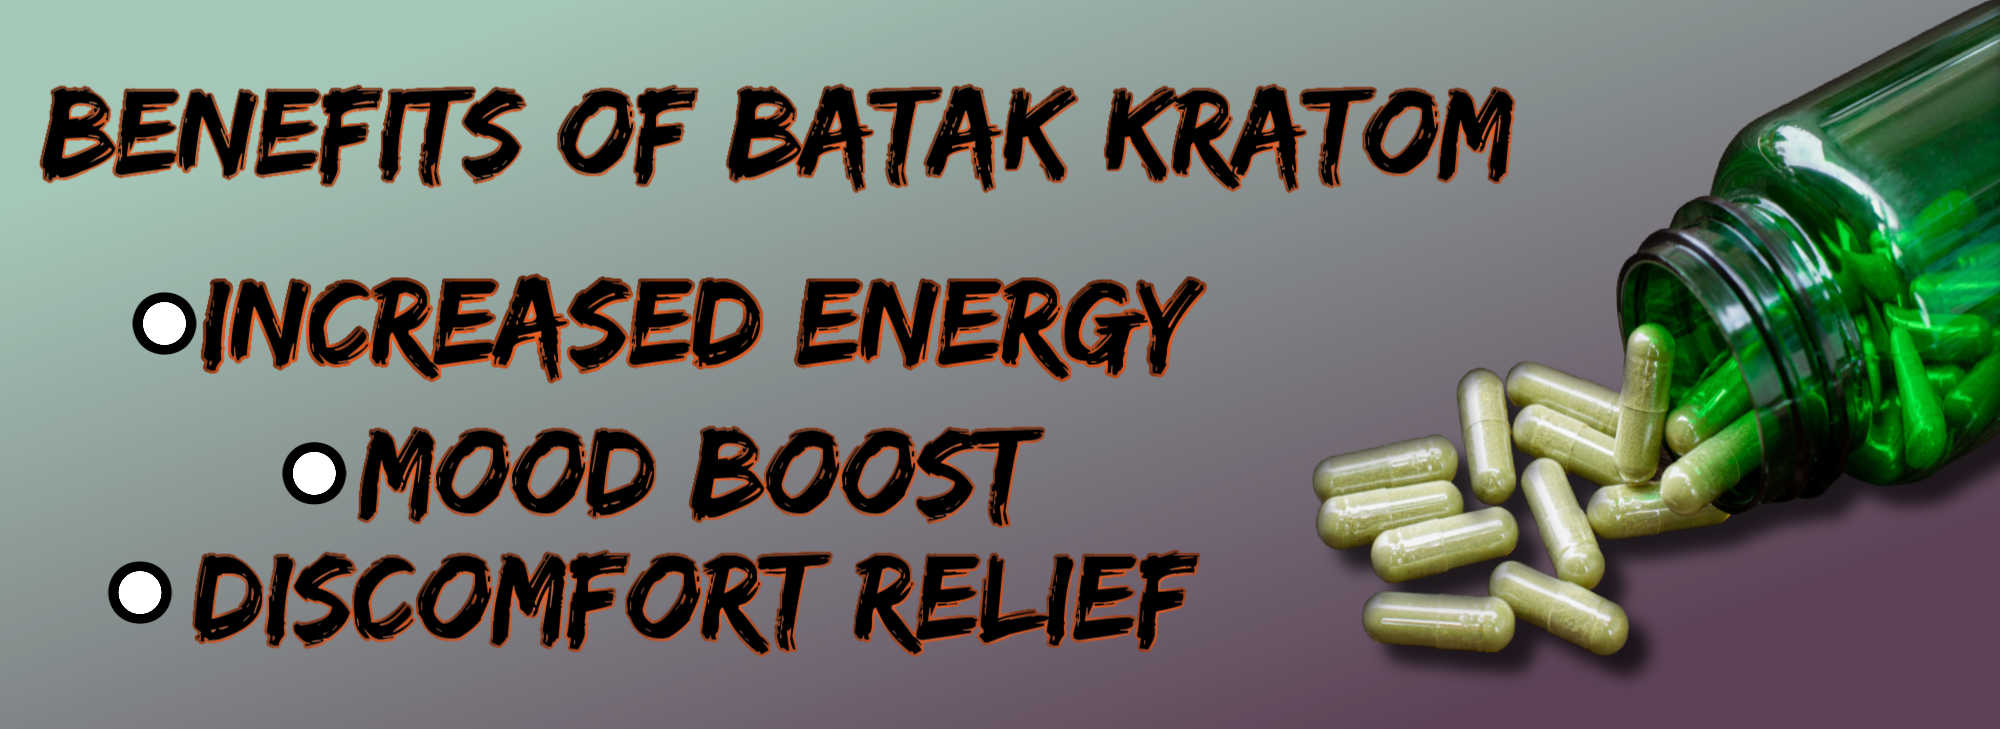 image of batak kratom benefits